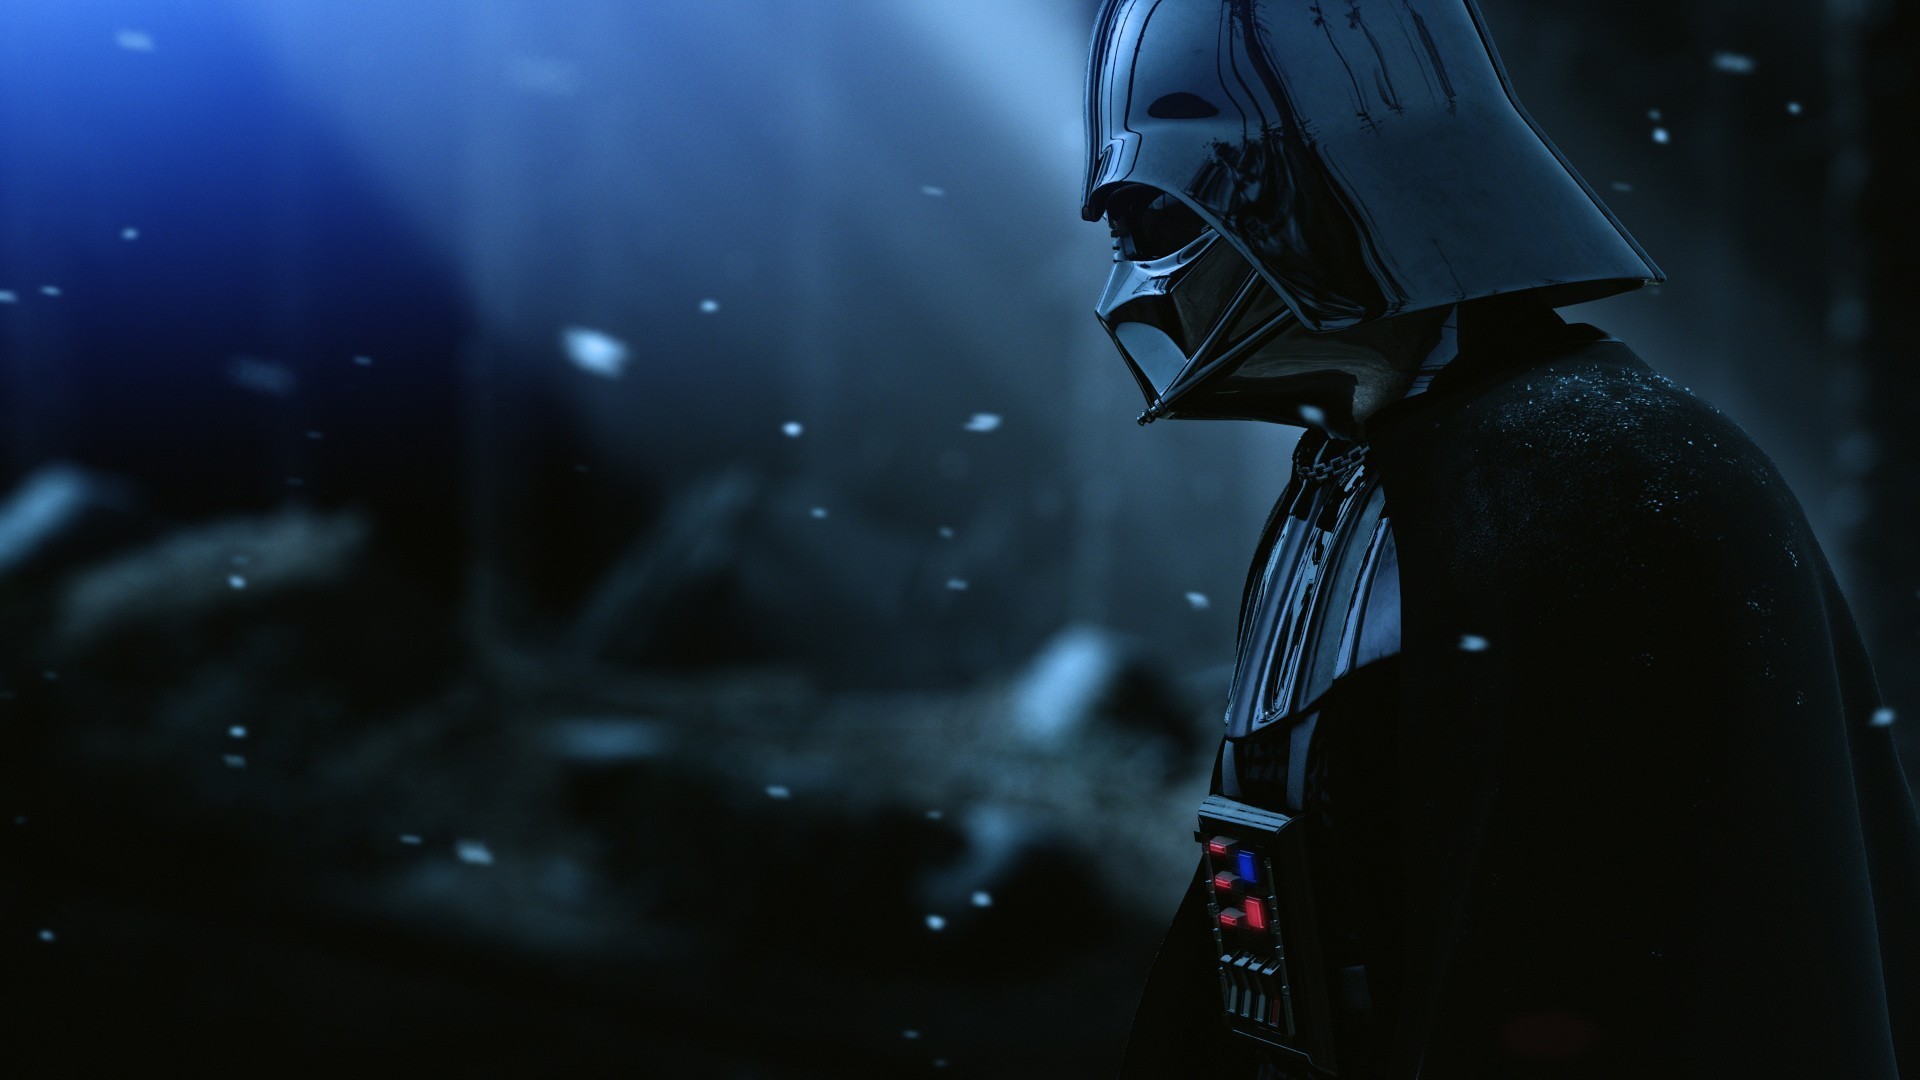 General anime Darth Vader villain anime Jedi evil armor movies  Star Wars blurred digital art